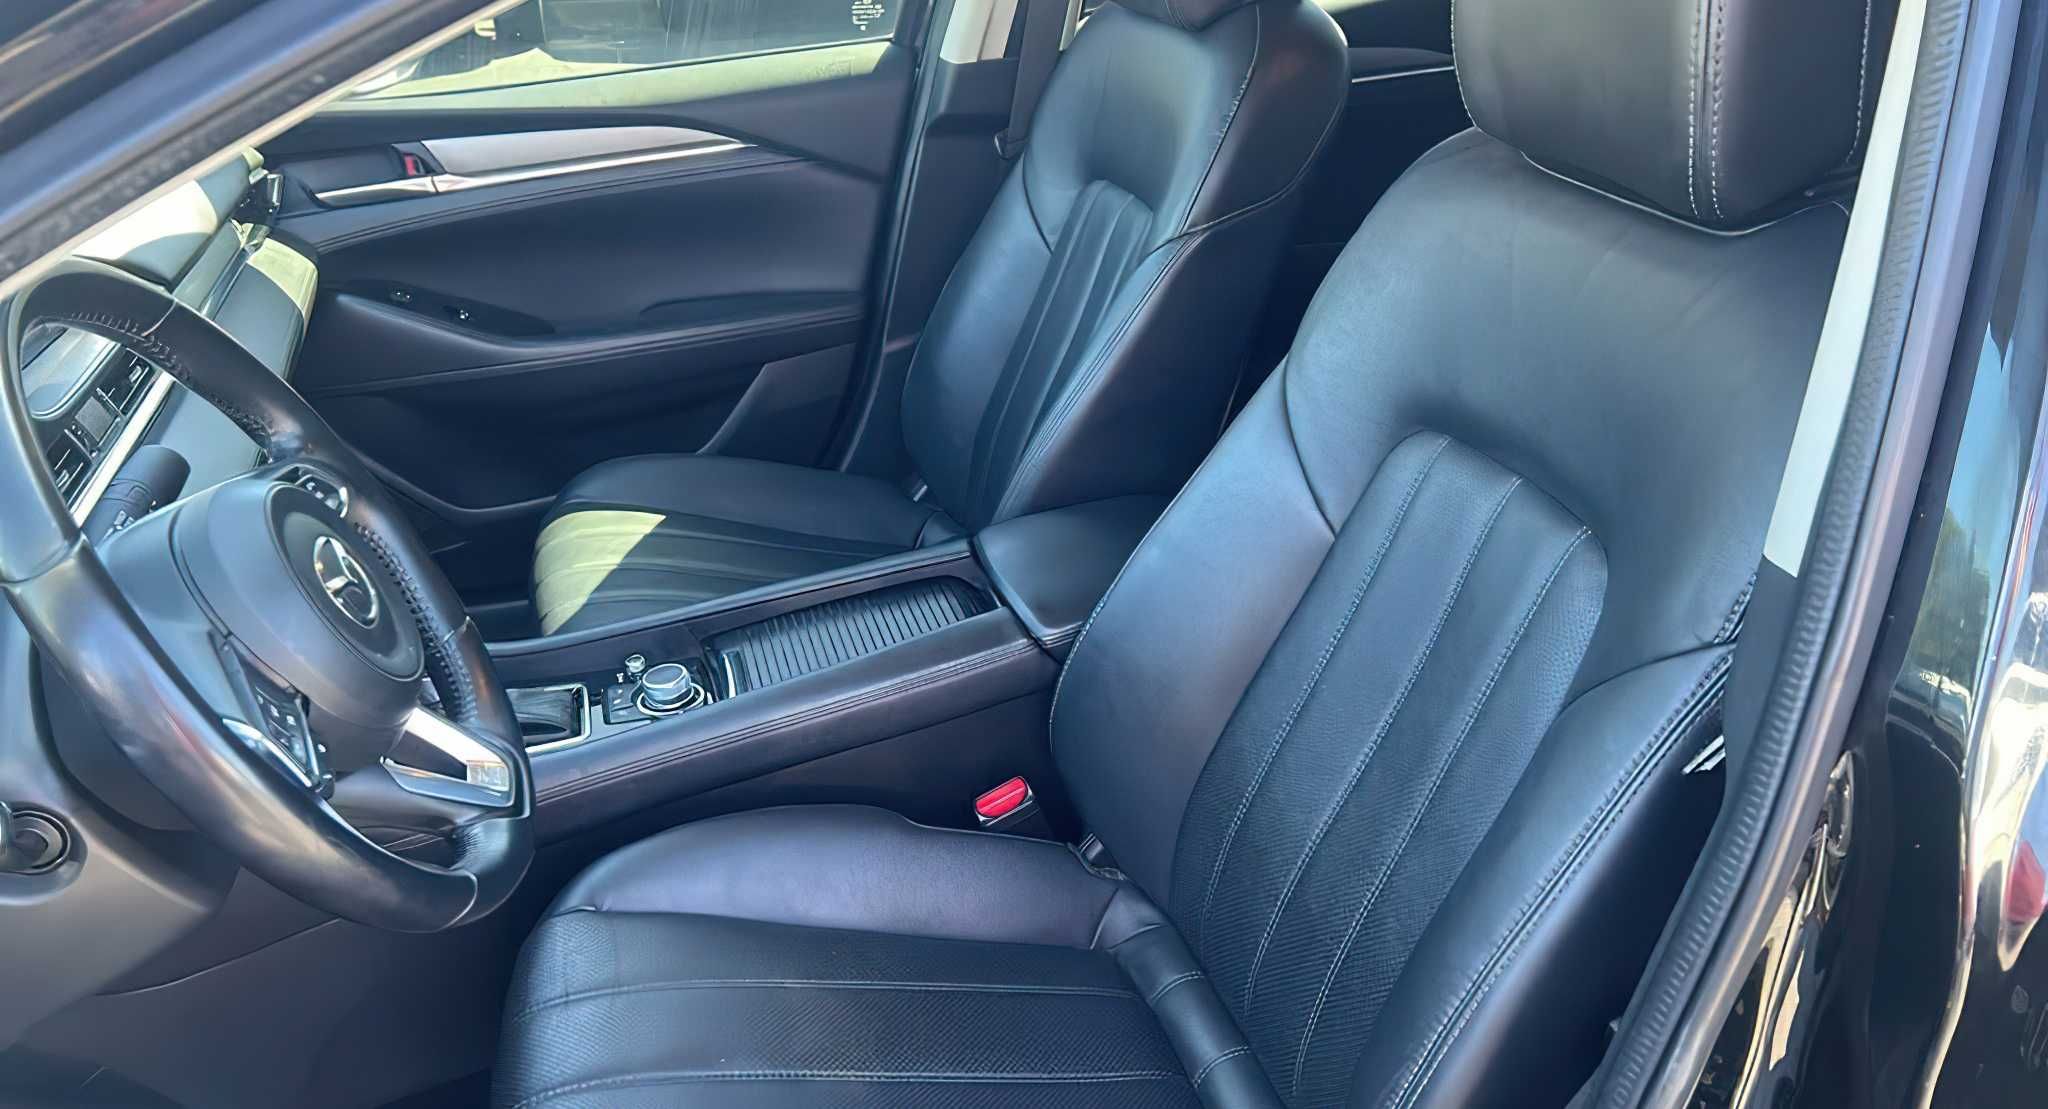 2019 Mazda 6 Touring